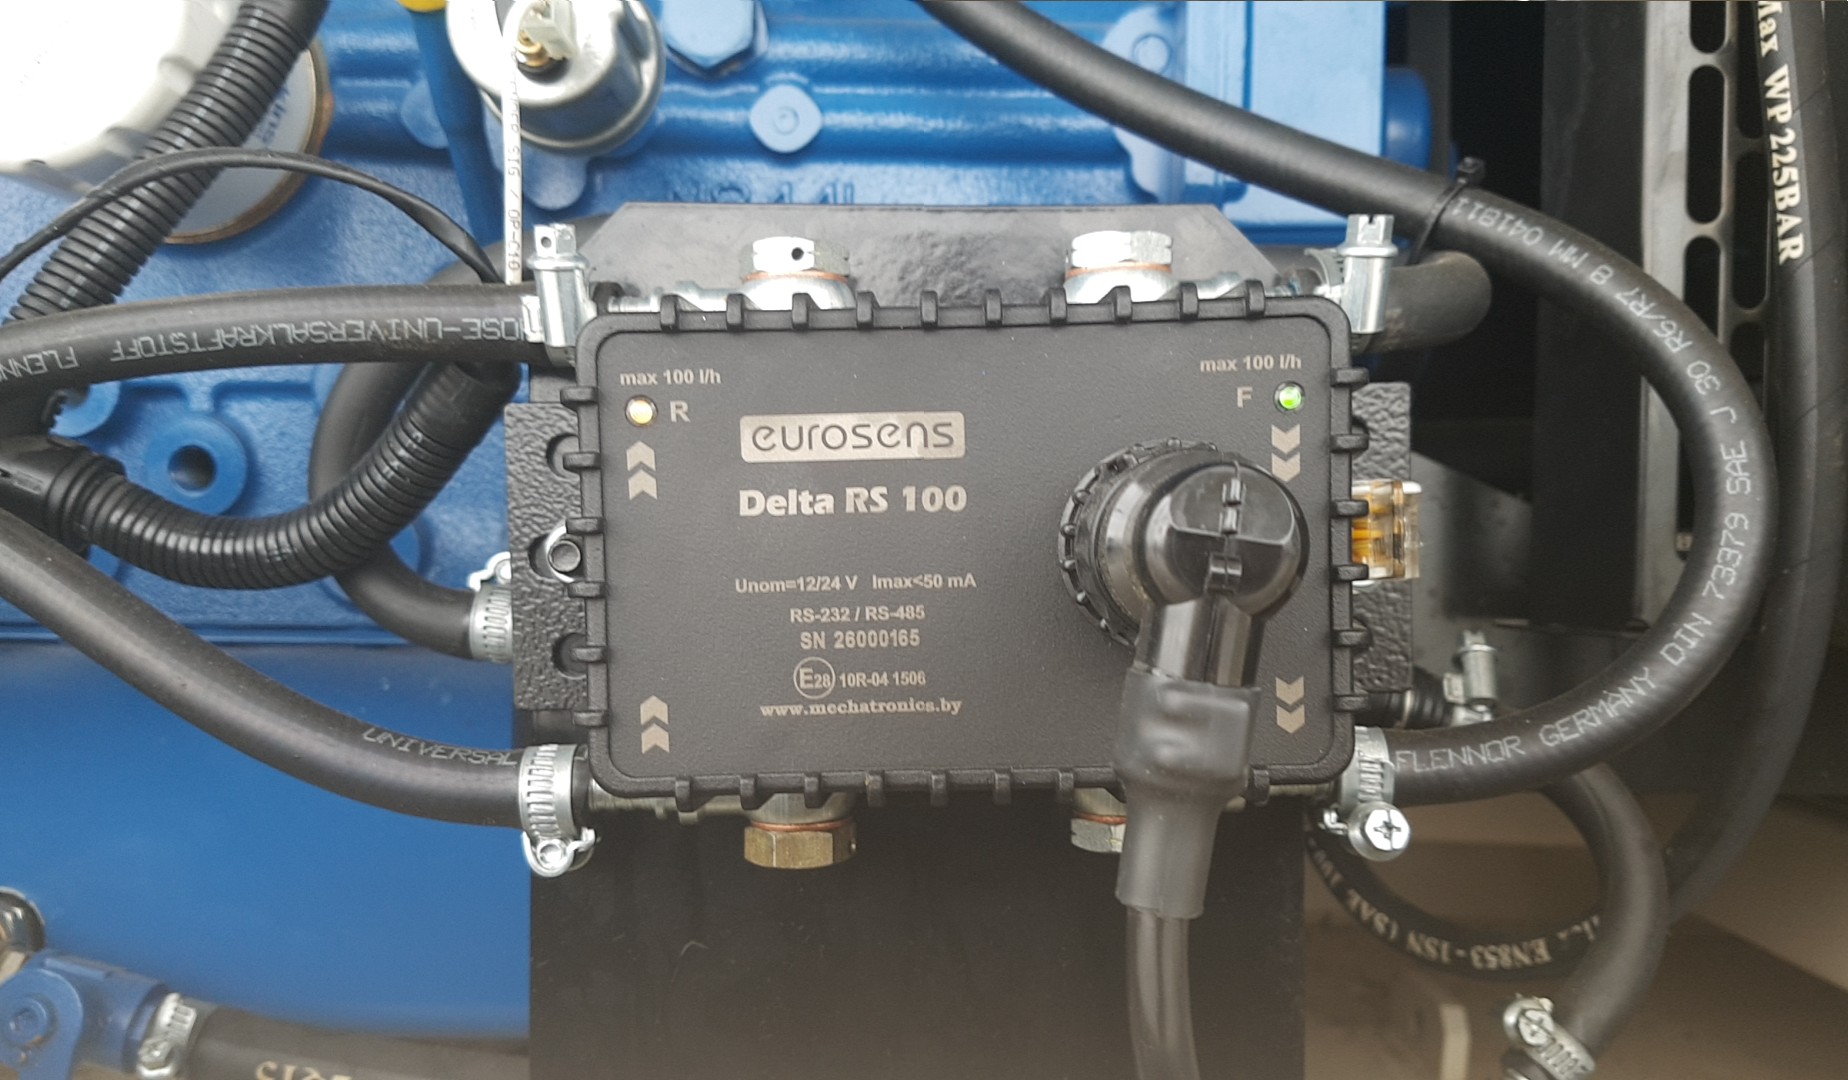 Сатомс. Датчик расхода топлива EUROSENS Delta RS 250. Delta RS 100 датчик расхода топлива. Датчик расхода топлива EUROSENS Delta RS 100. Датчик расхода топлива Delta rs250.